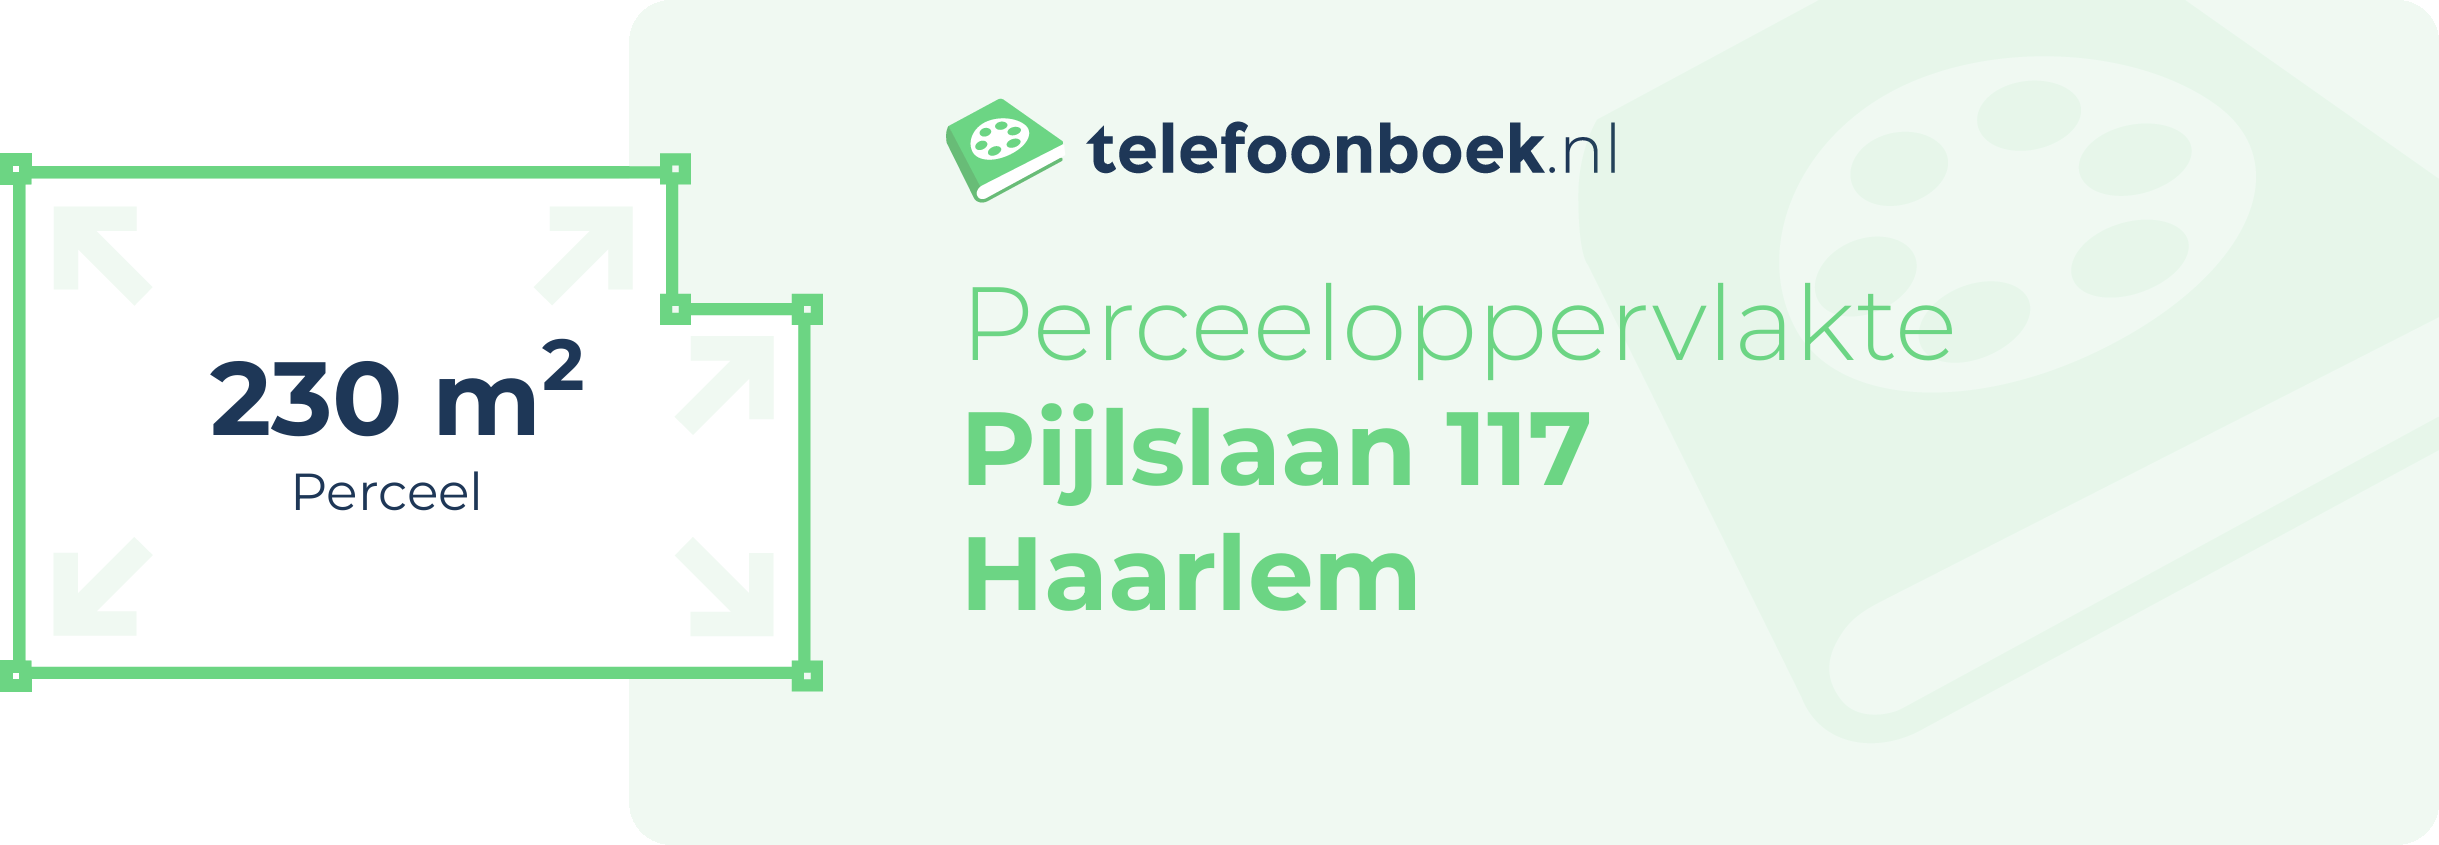 Perceeloppervlakte Pijlslaan 117 Haarlem